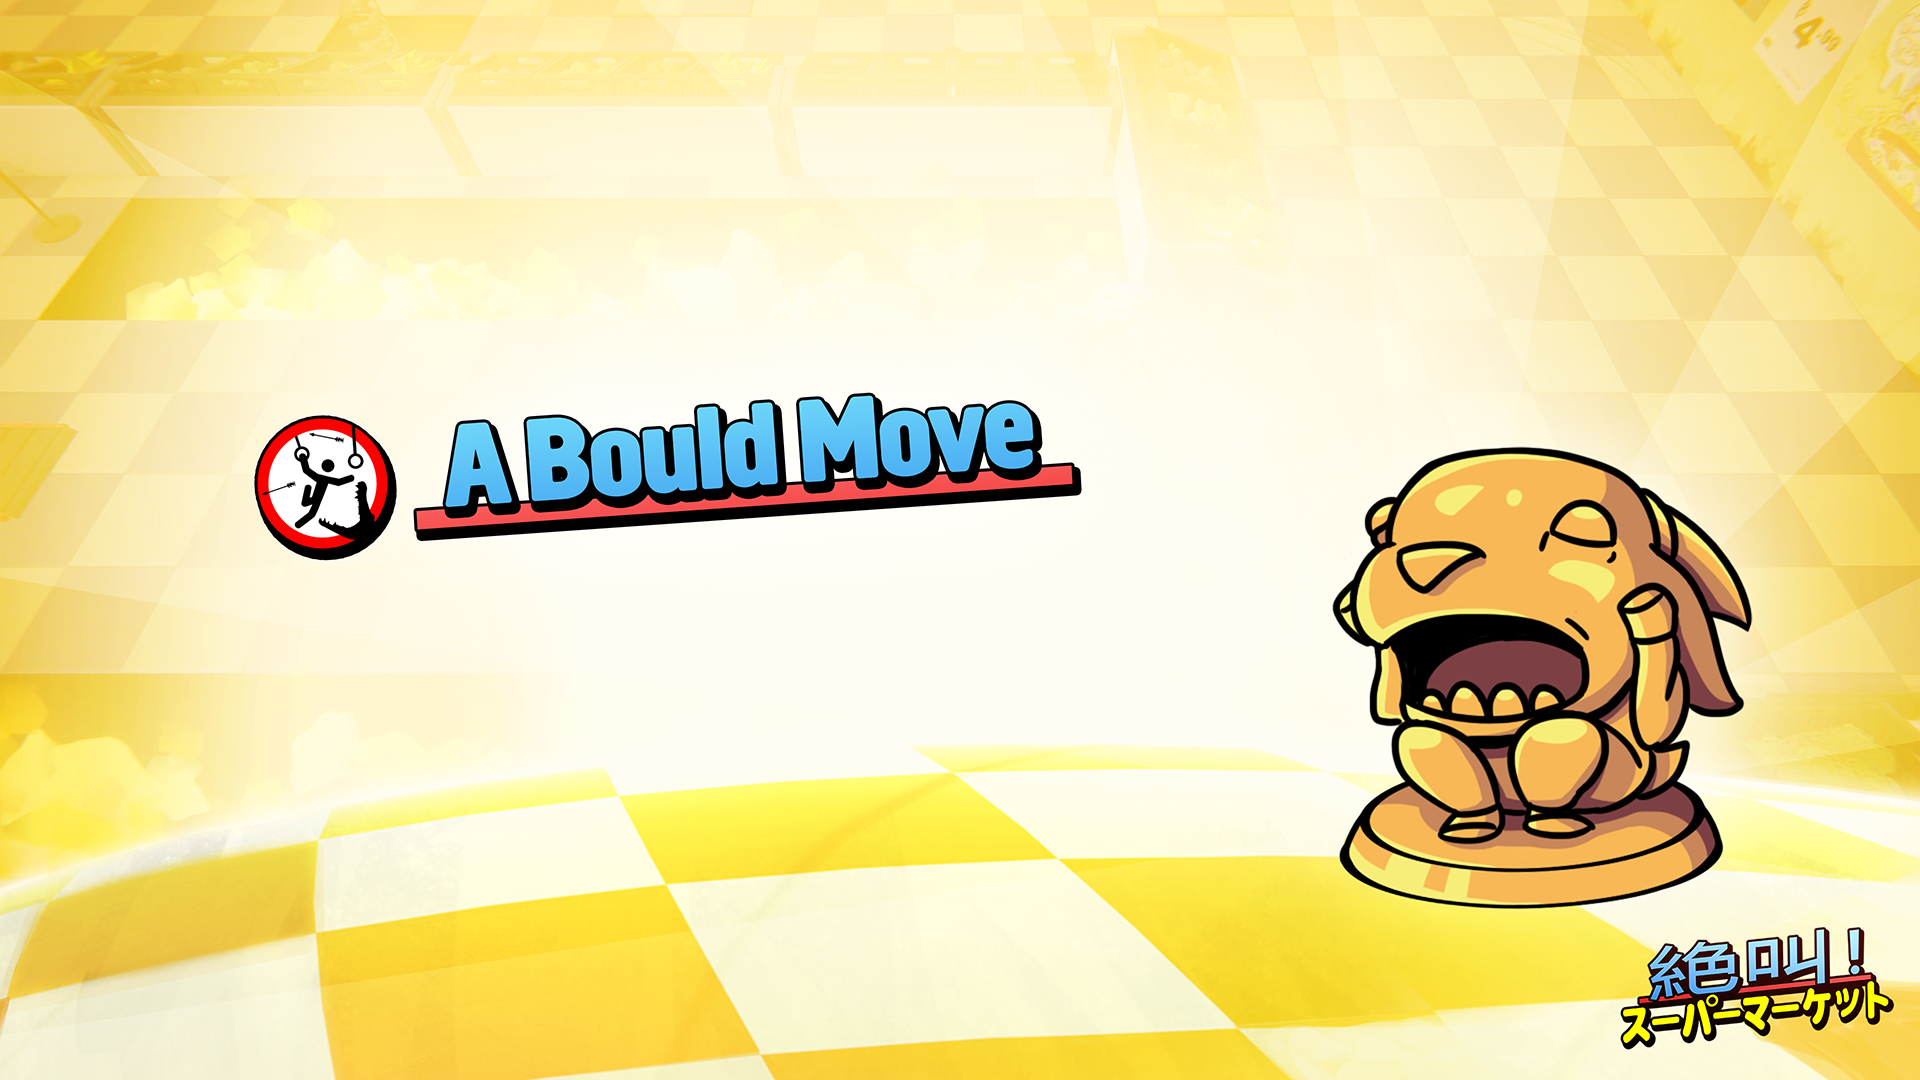 Icon for A bould move